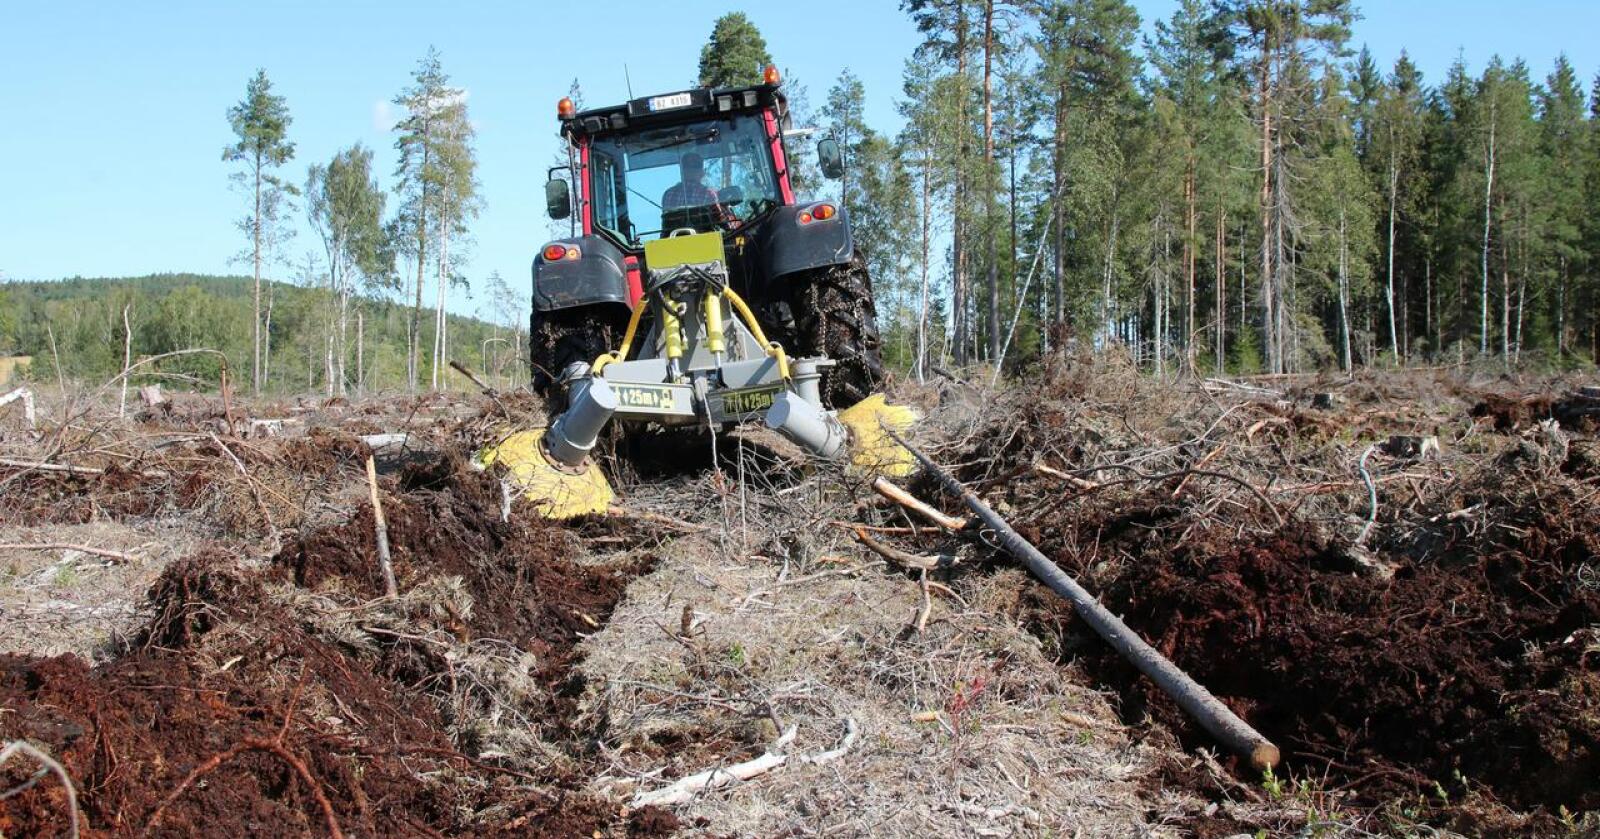 Mangfold og klima: Skogforvaltning er midt i de store samfunnsutfordringene som klima, biologisk mangfold og arealbruk, skriver Gudmund Nordtun. (Foto: Traktor)